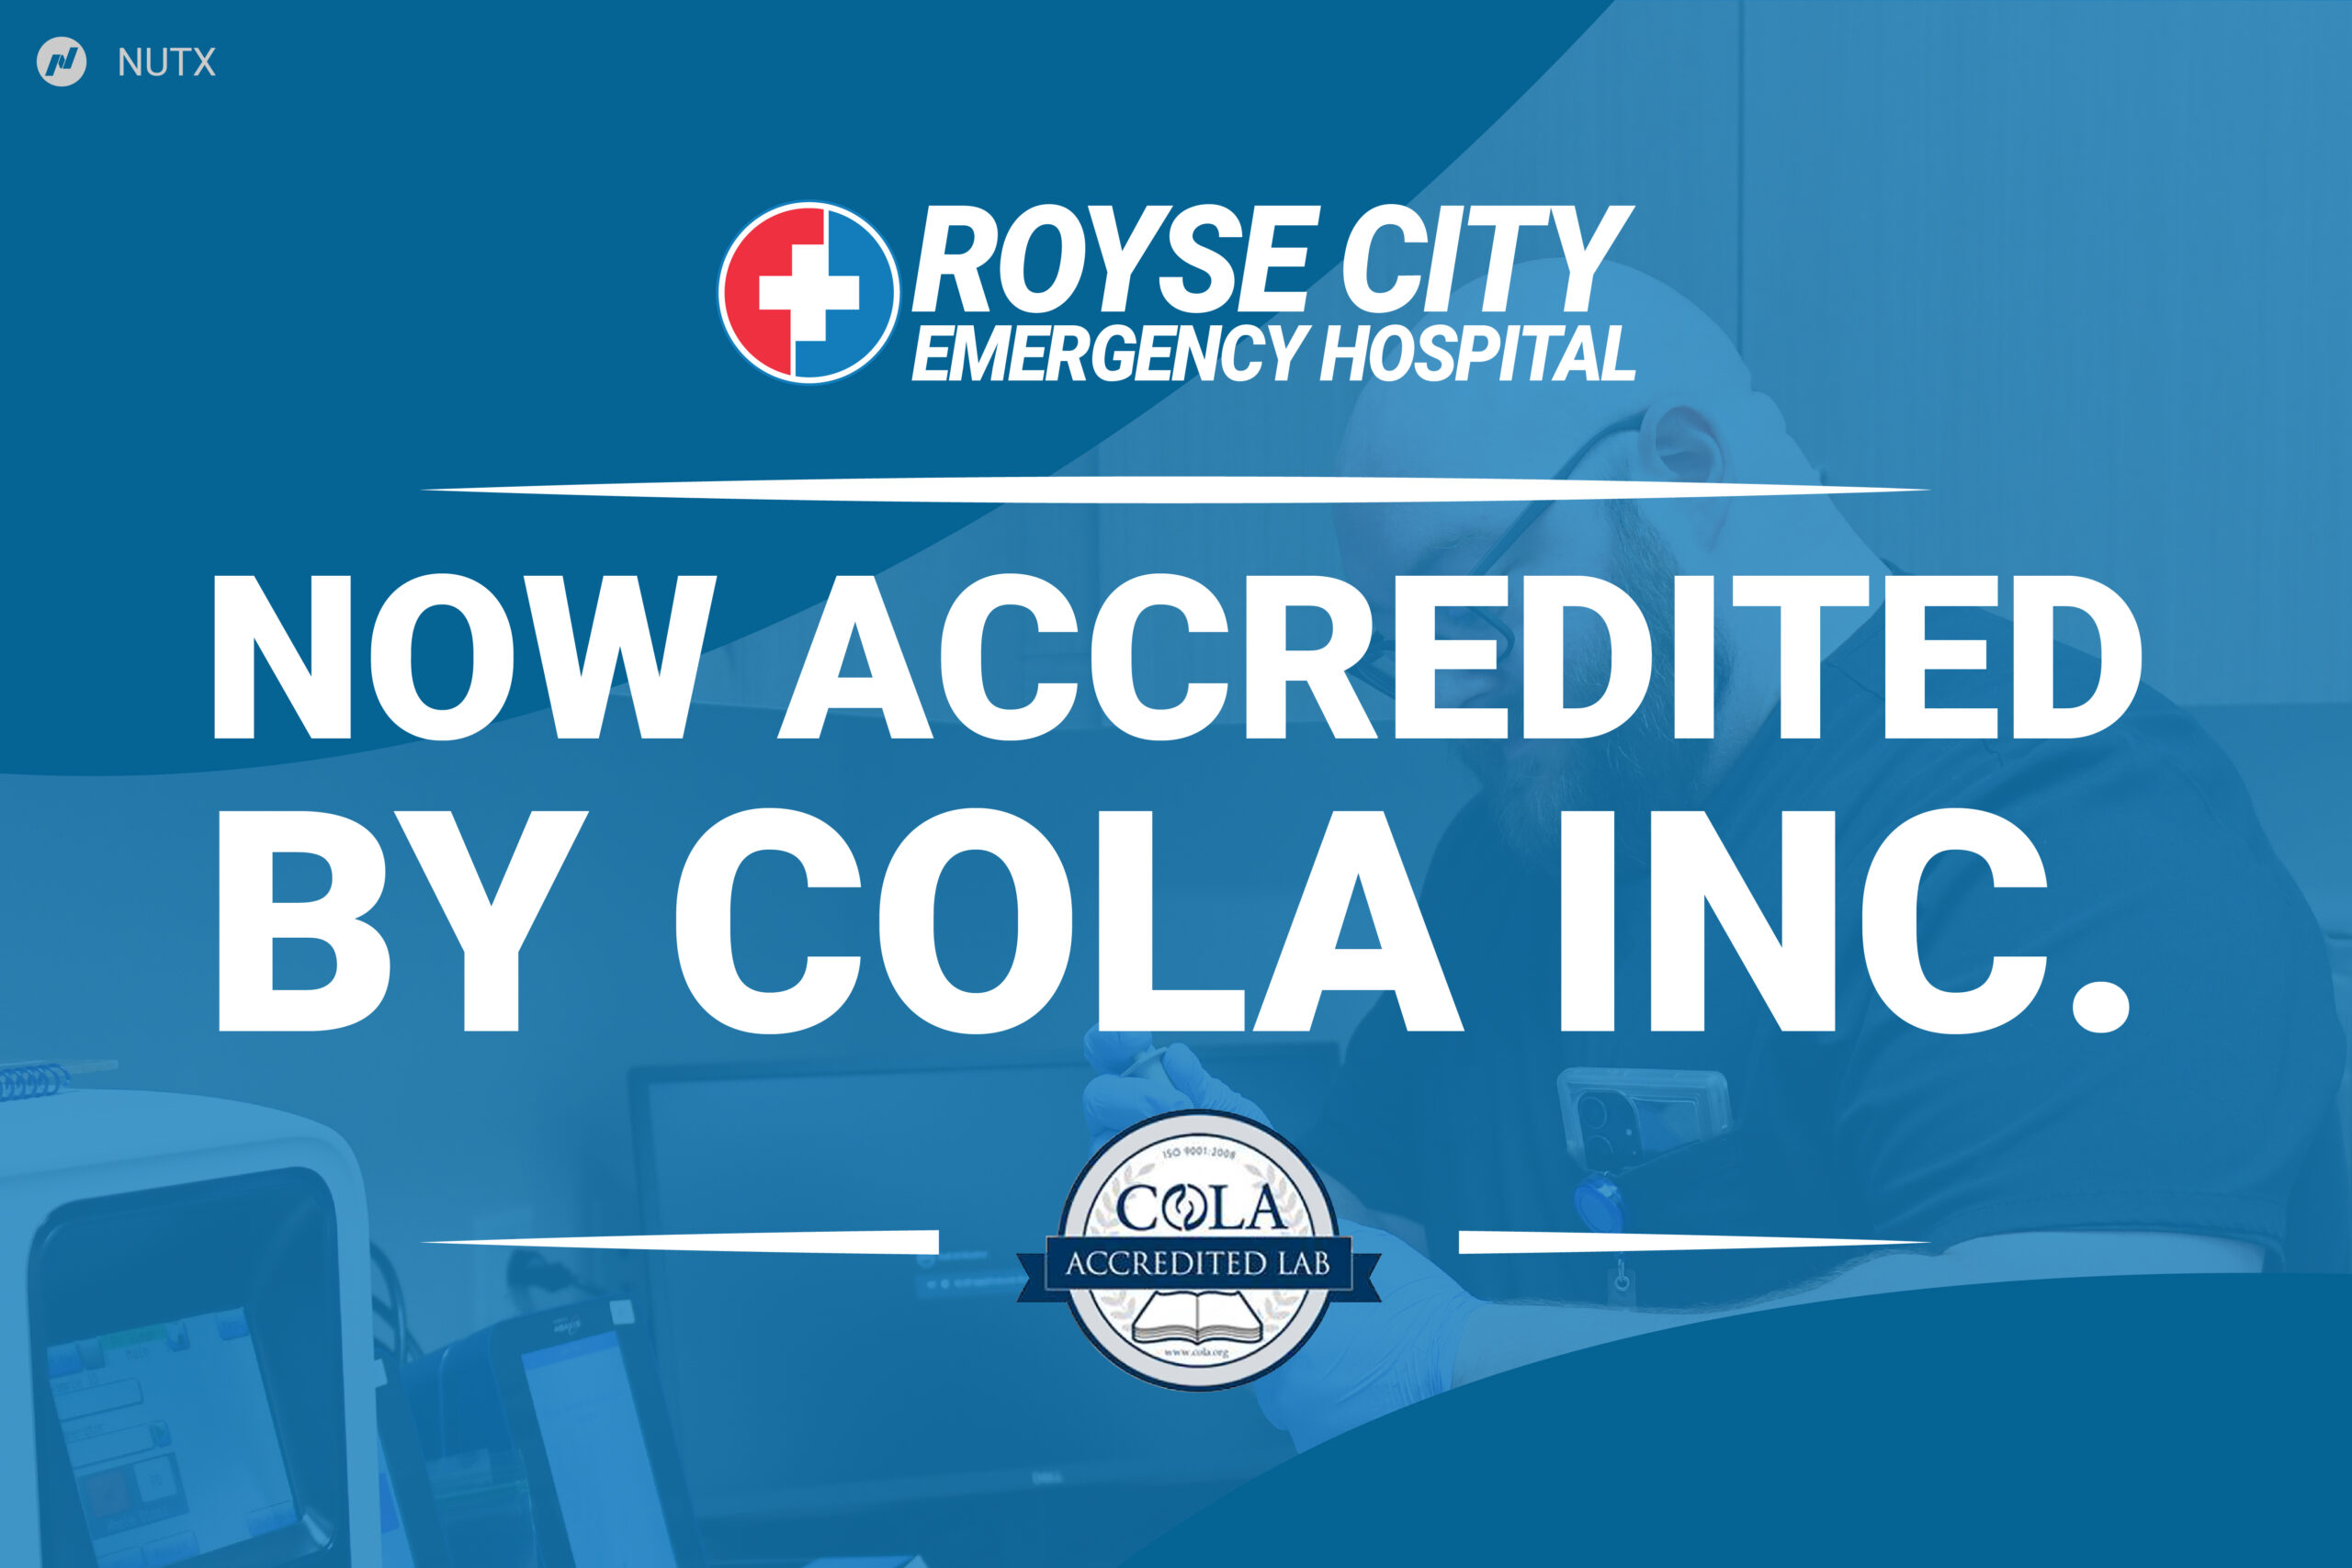 Royse City Emergency Hospital COLA Inc. accredited.